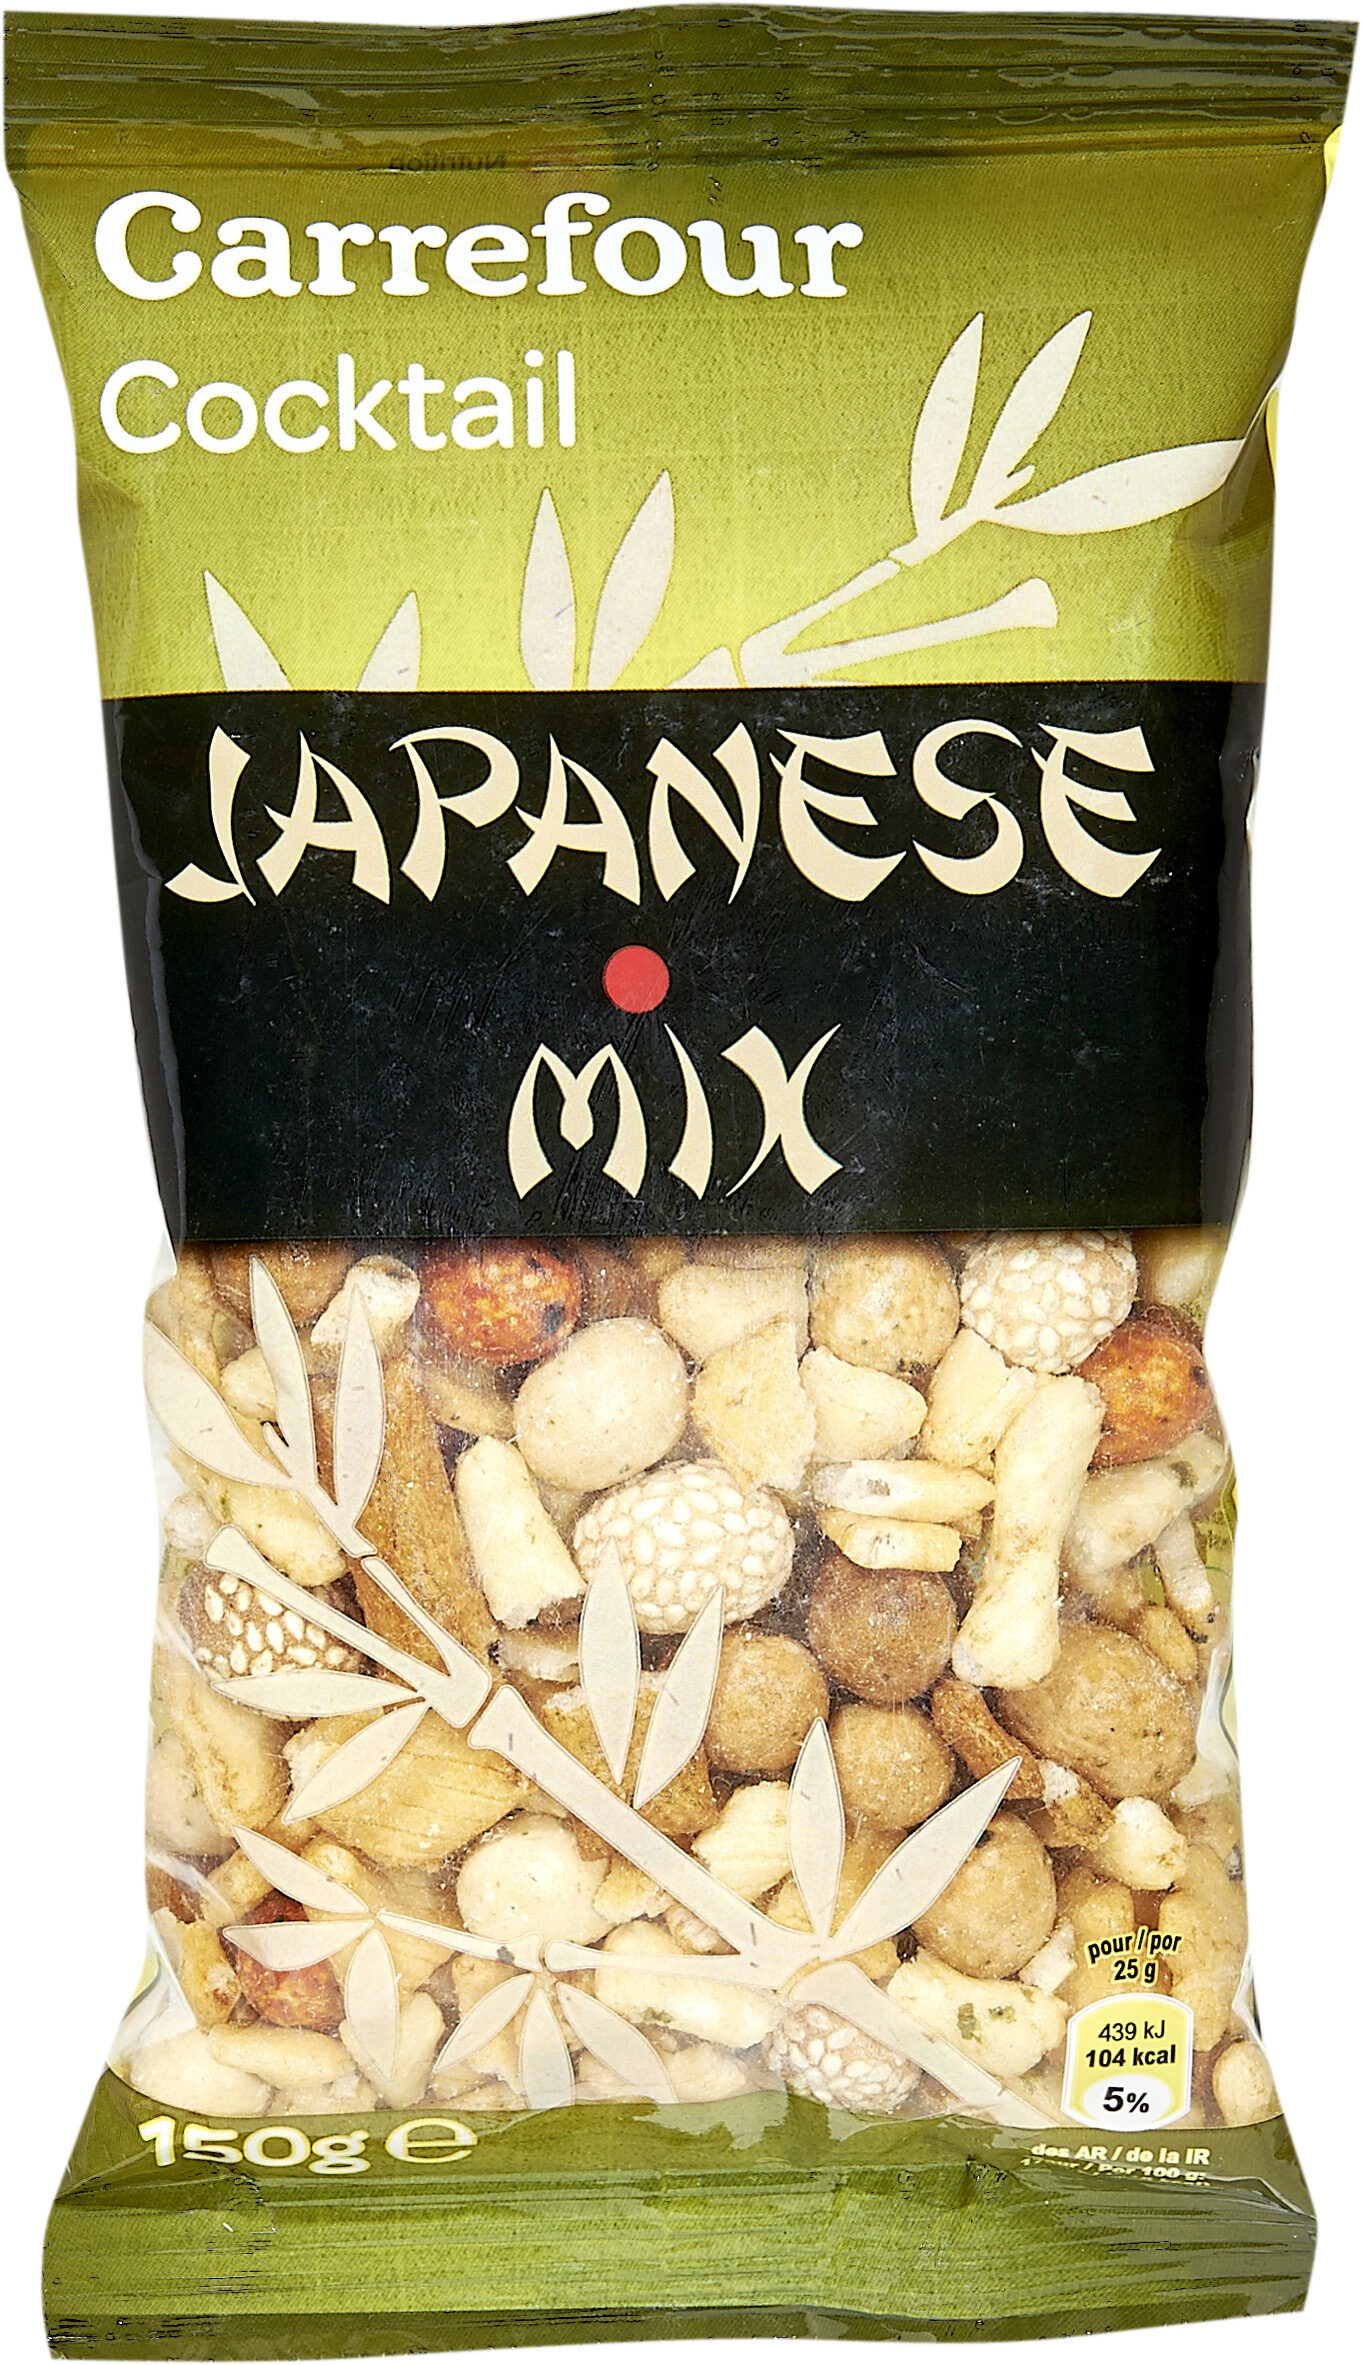 Cocktail japanese style - Produit